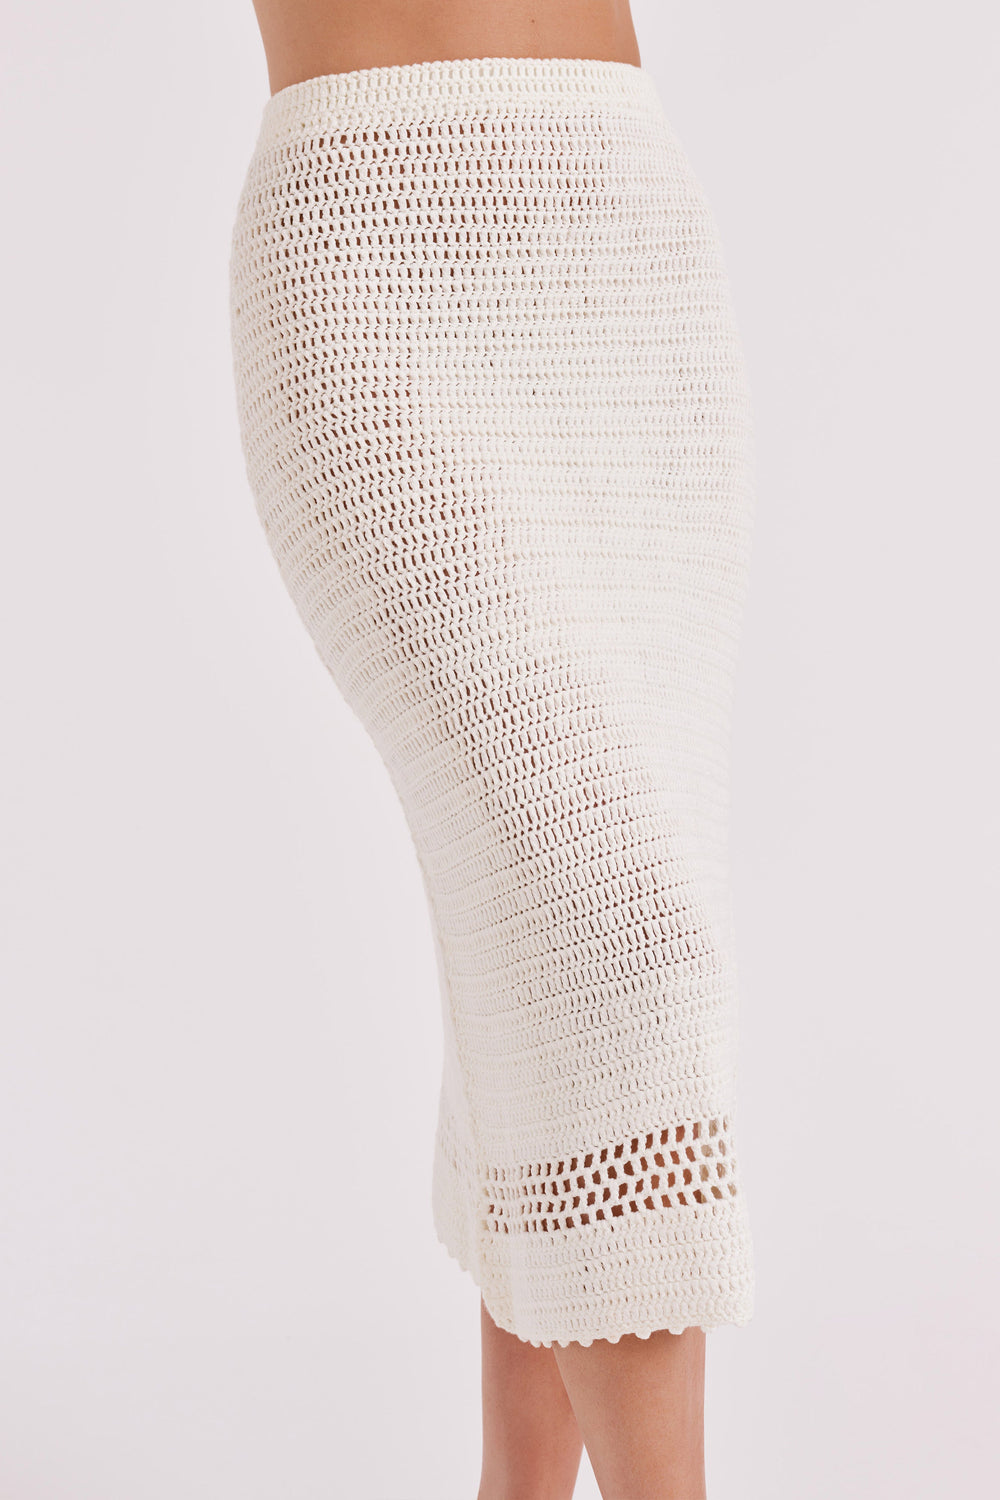 Paris Crochet Midi Skirt - Ivory